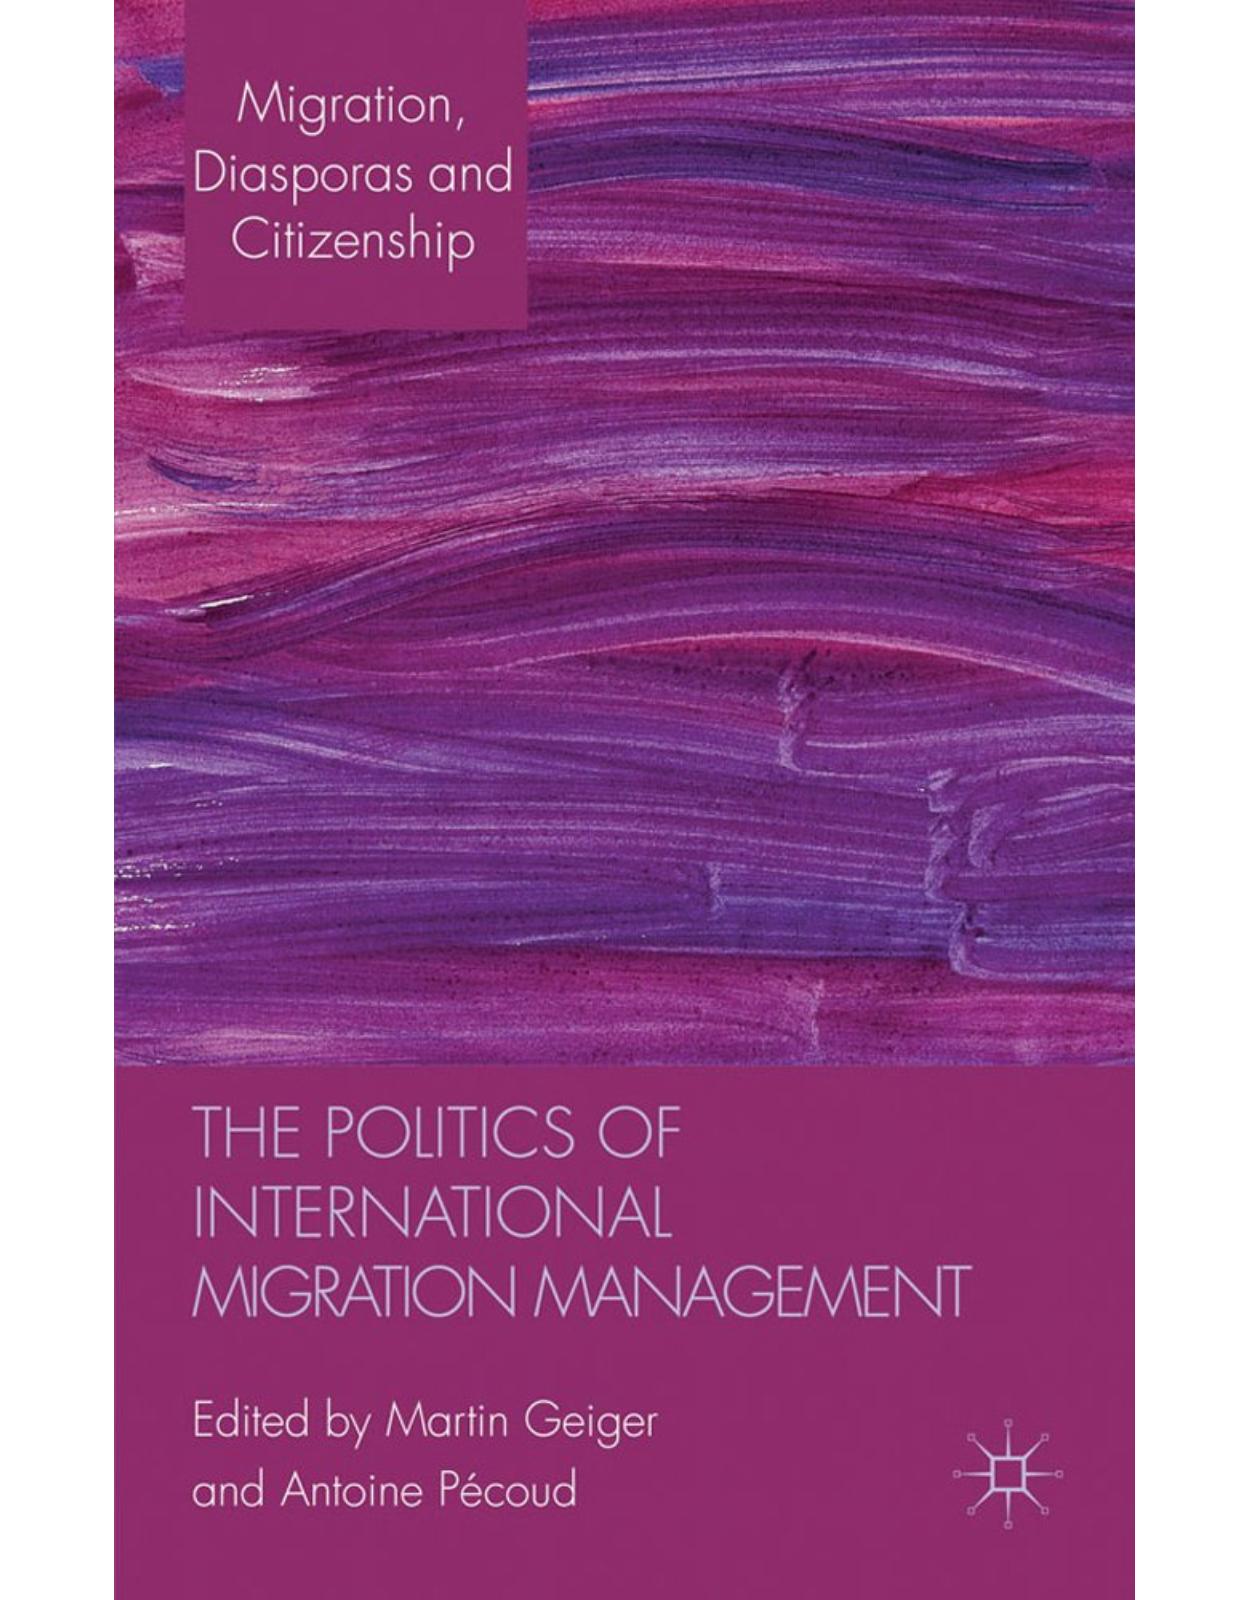 The Politics of International Migration Management (Migration, Minorities and Citizenship) 